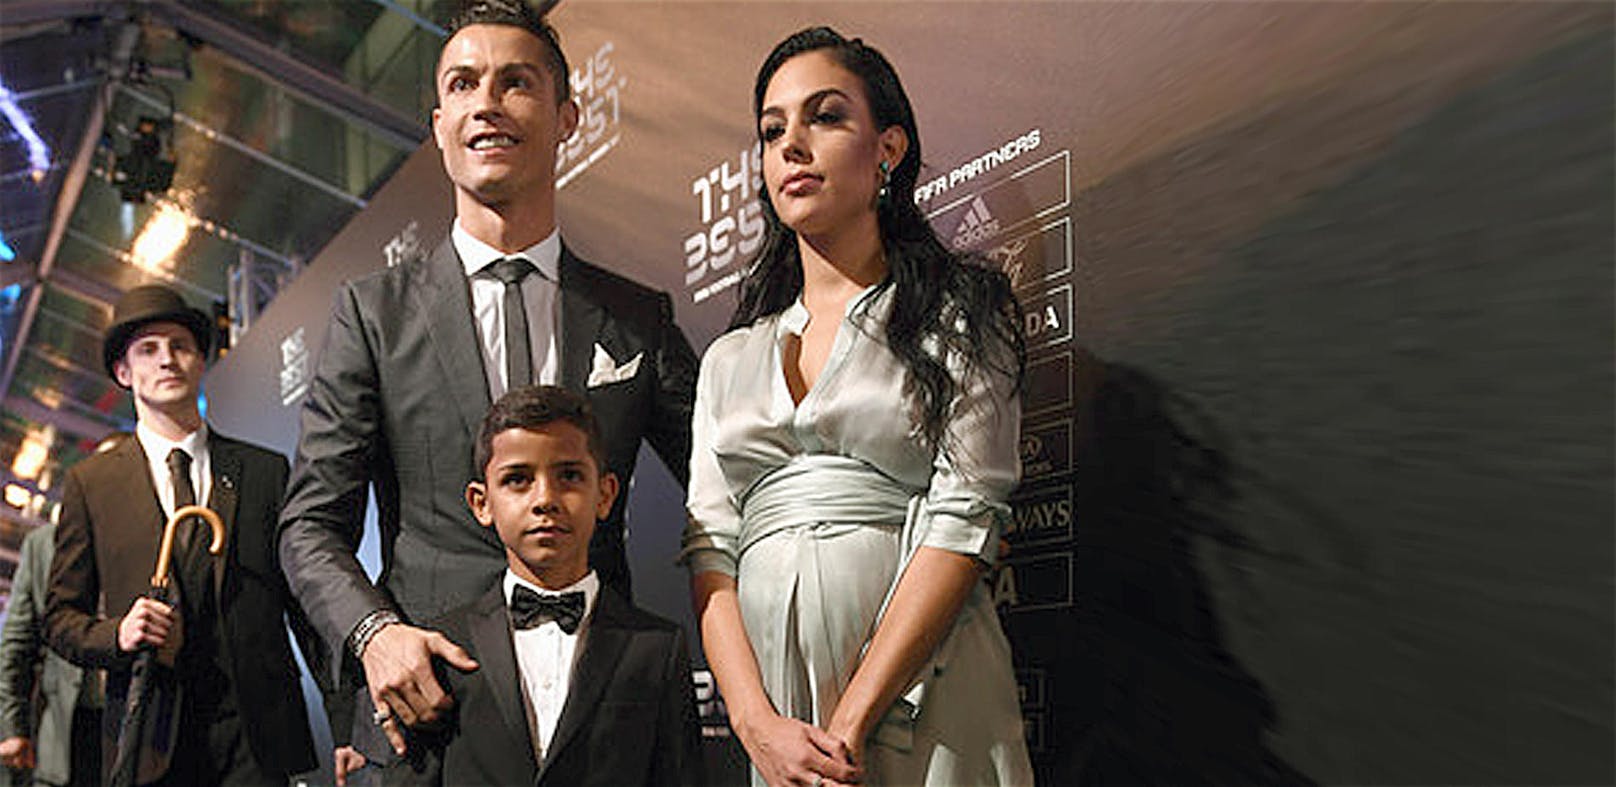 Cristiano Ronaldo mit Frau und Sohn